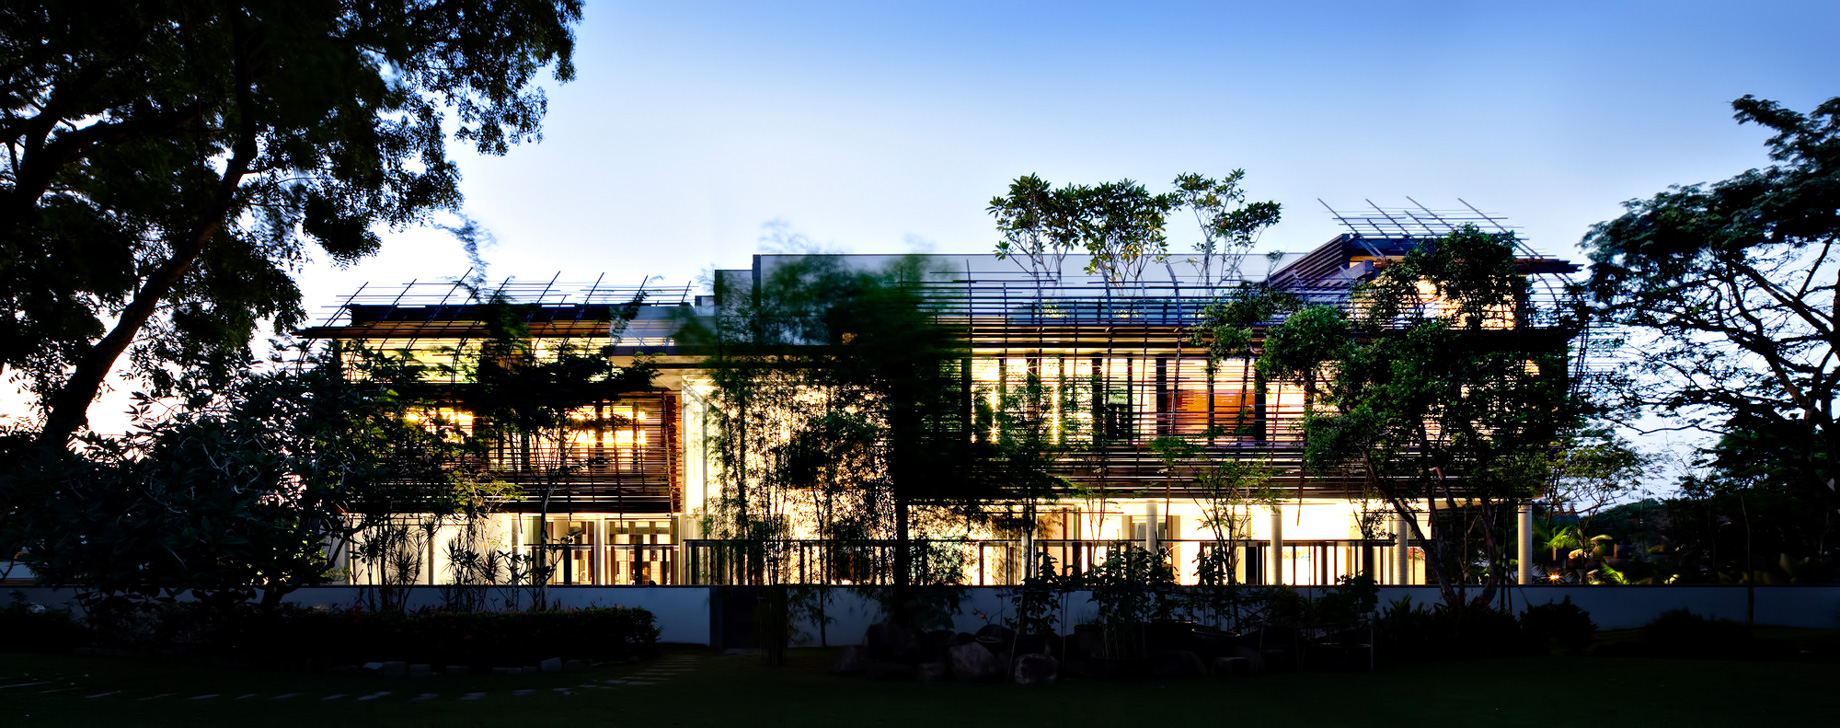 Nest House Luxury Residence – Jalan Sejarah, Singapore